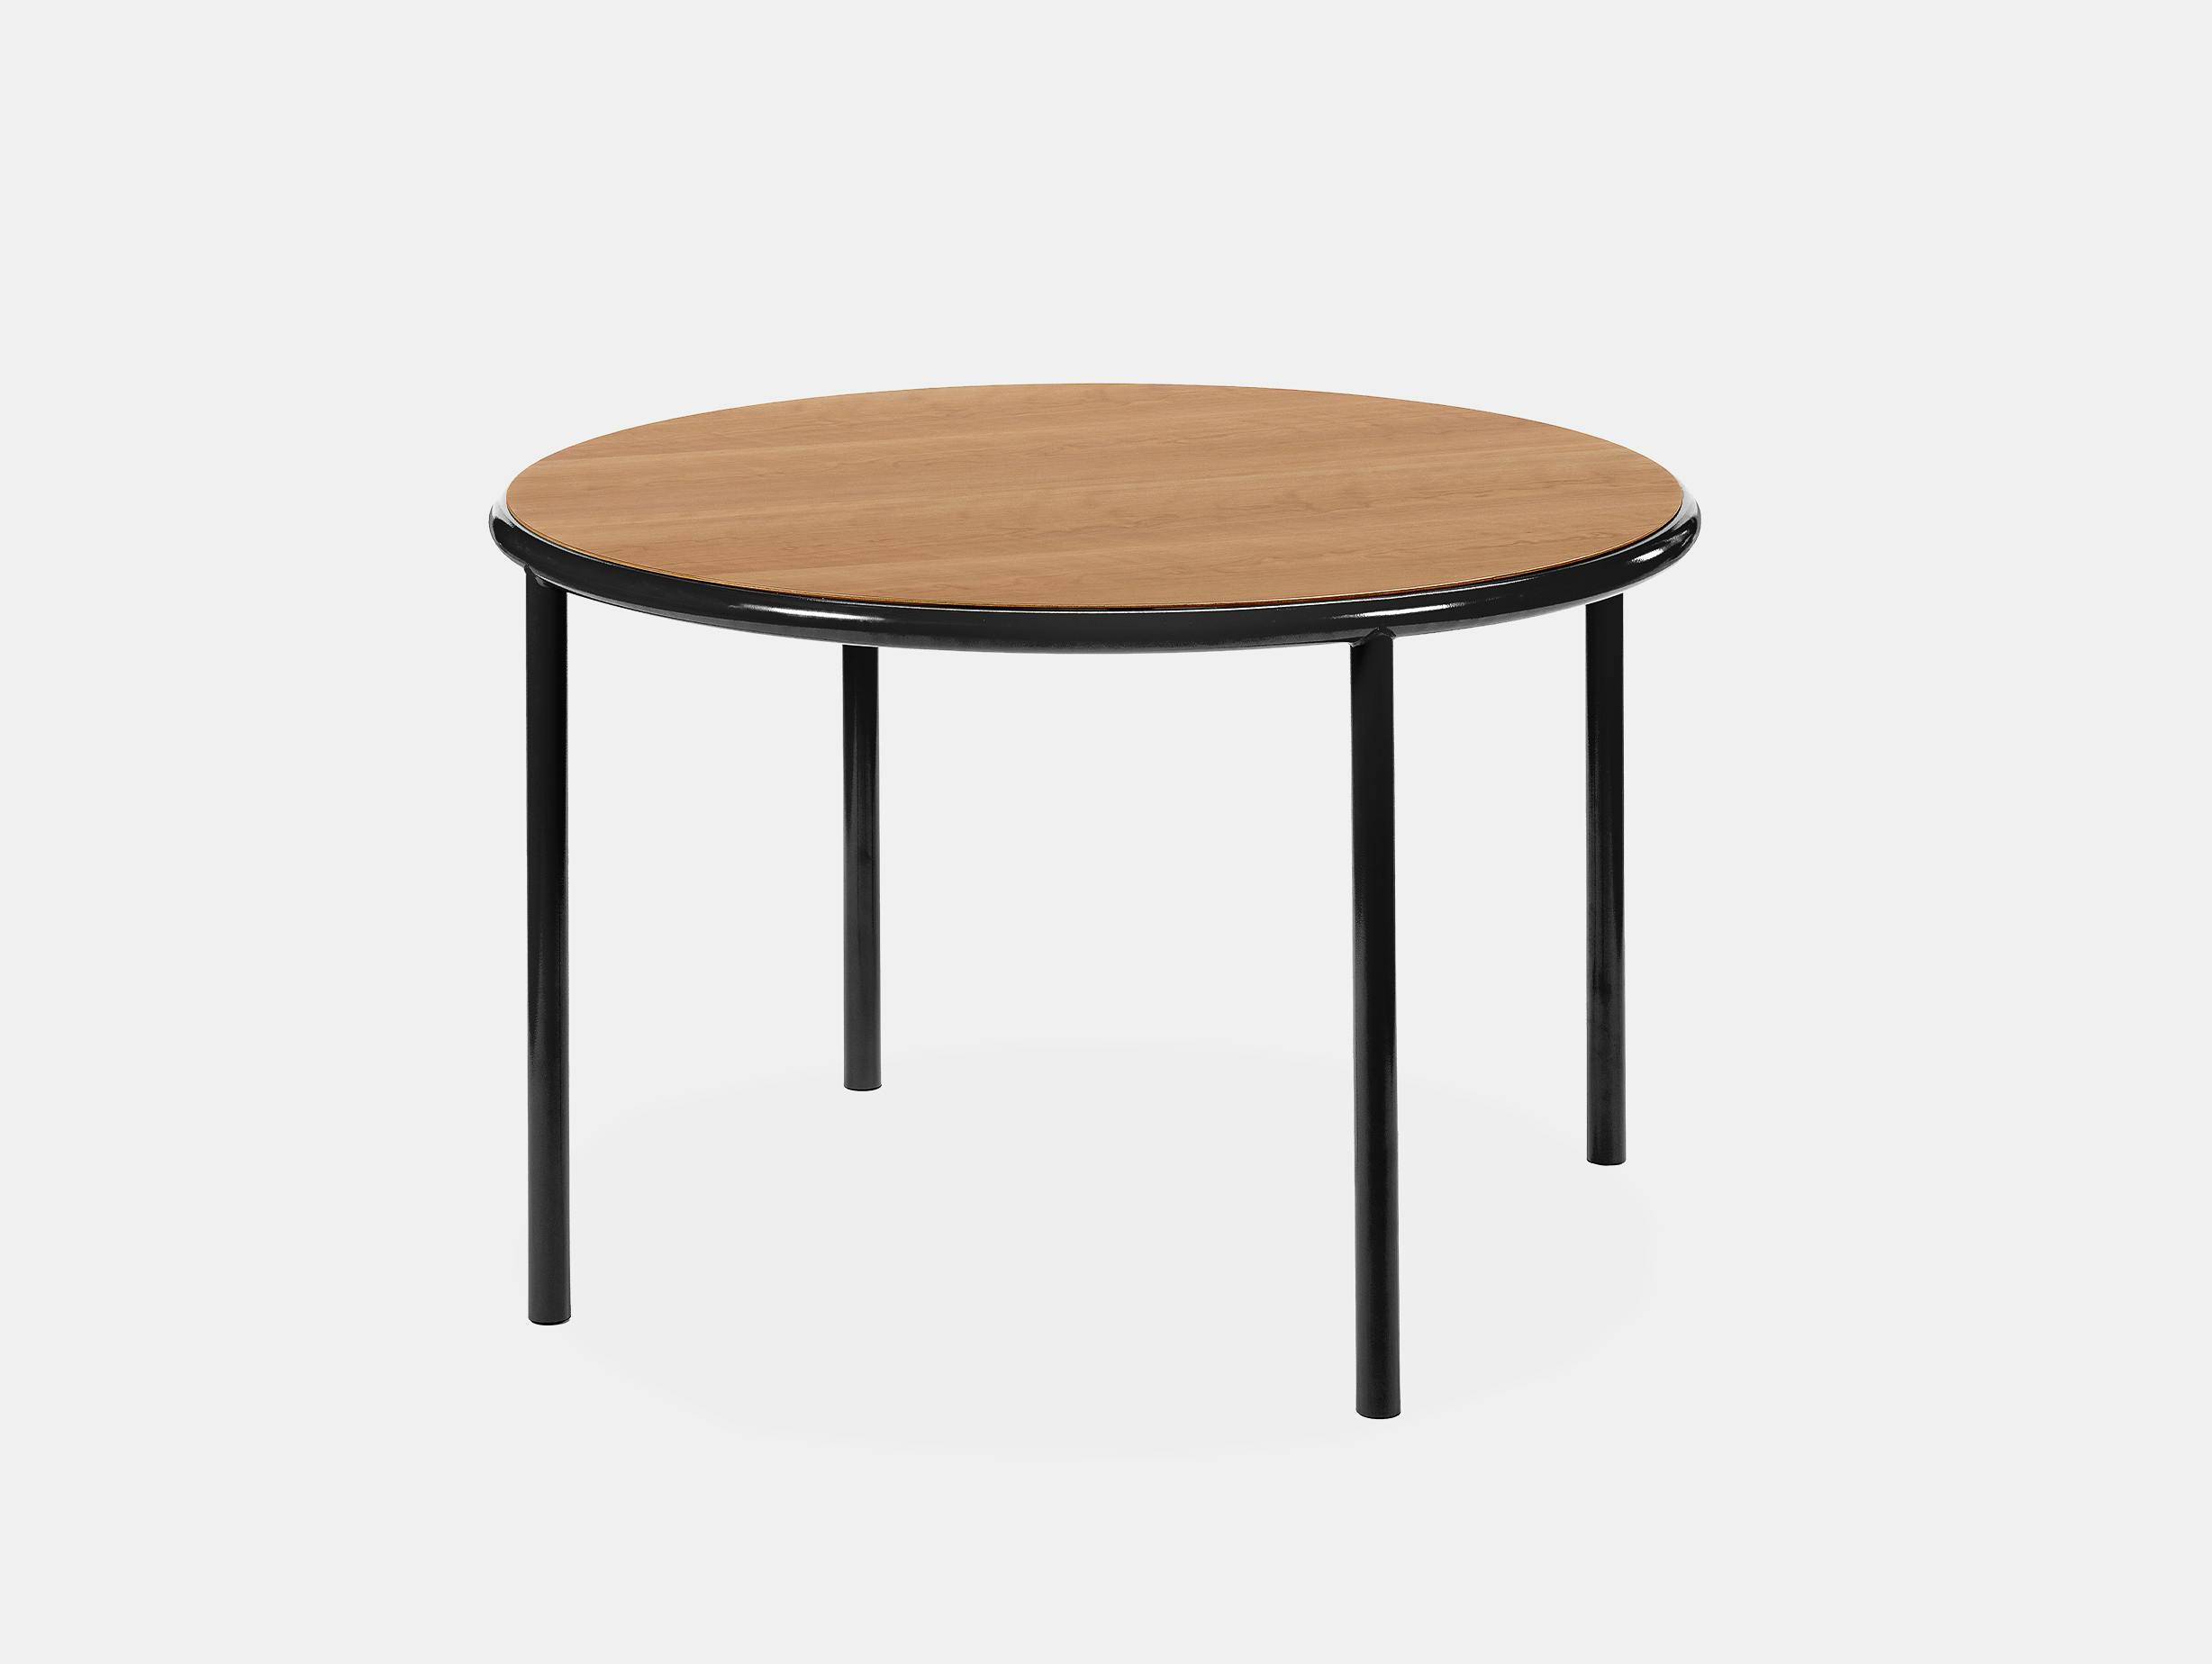 Muller van severen wooden table small round black cherry